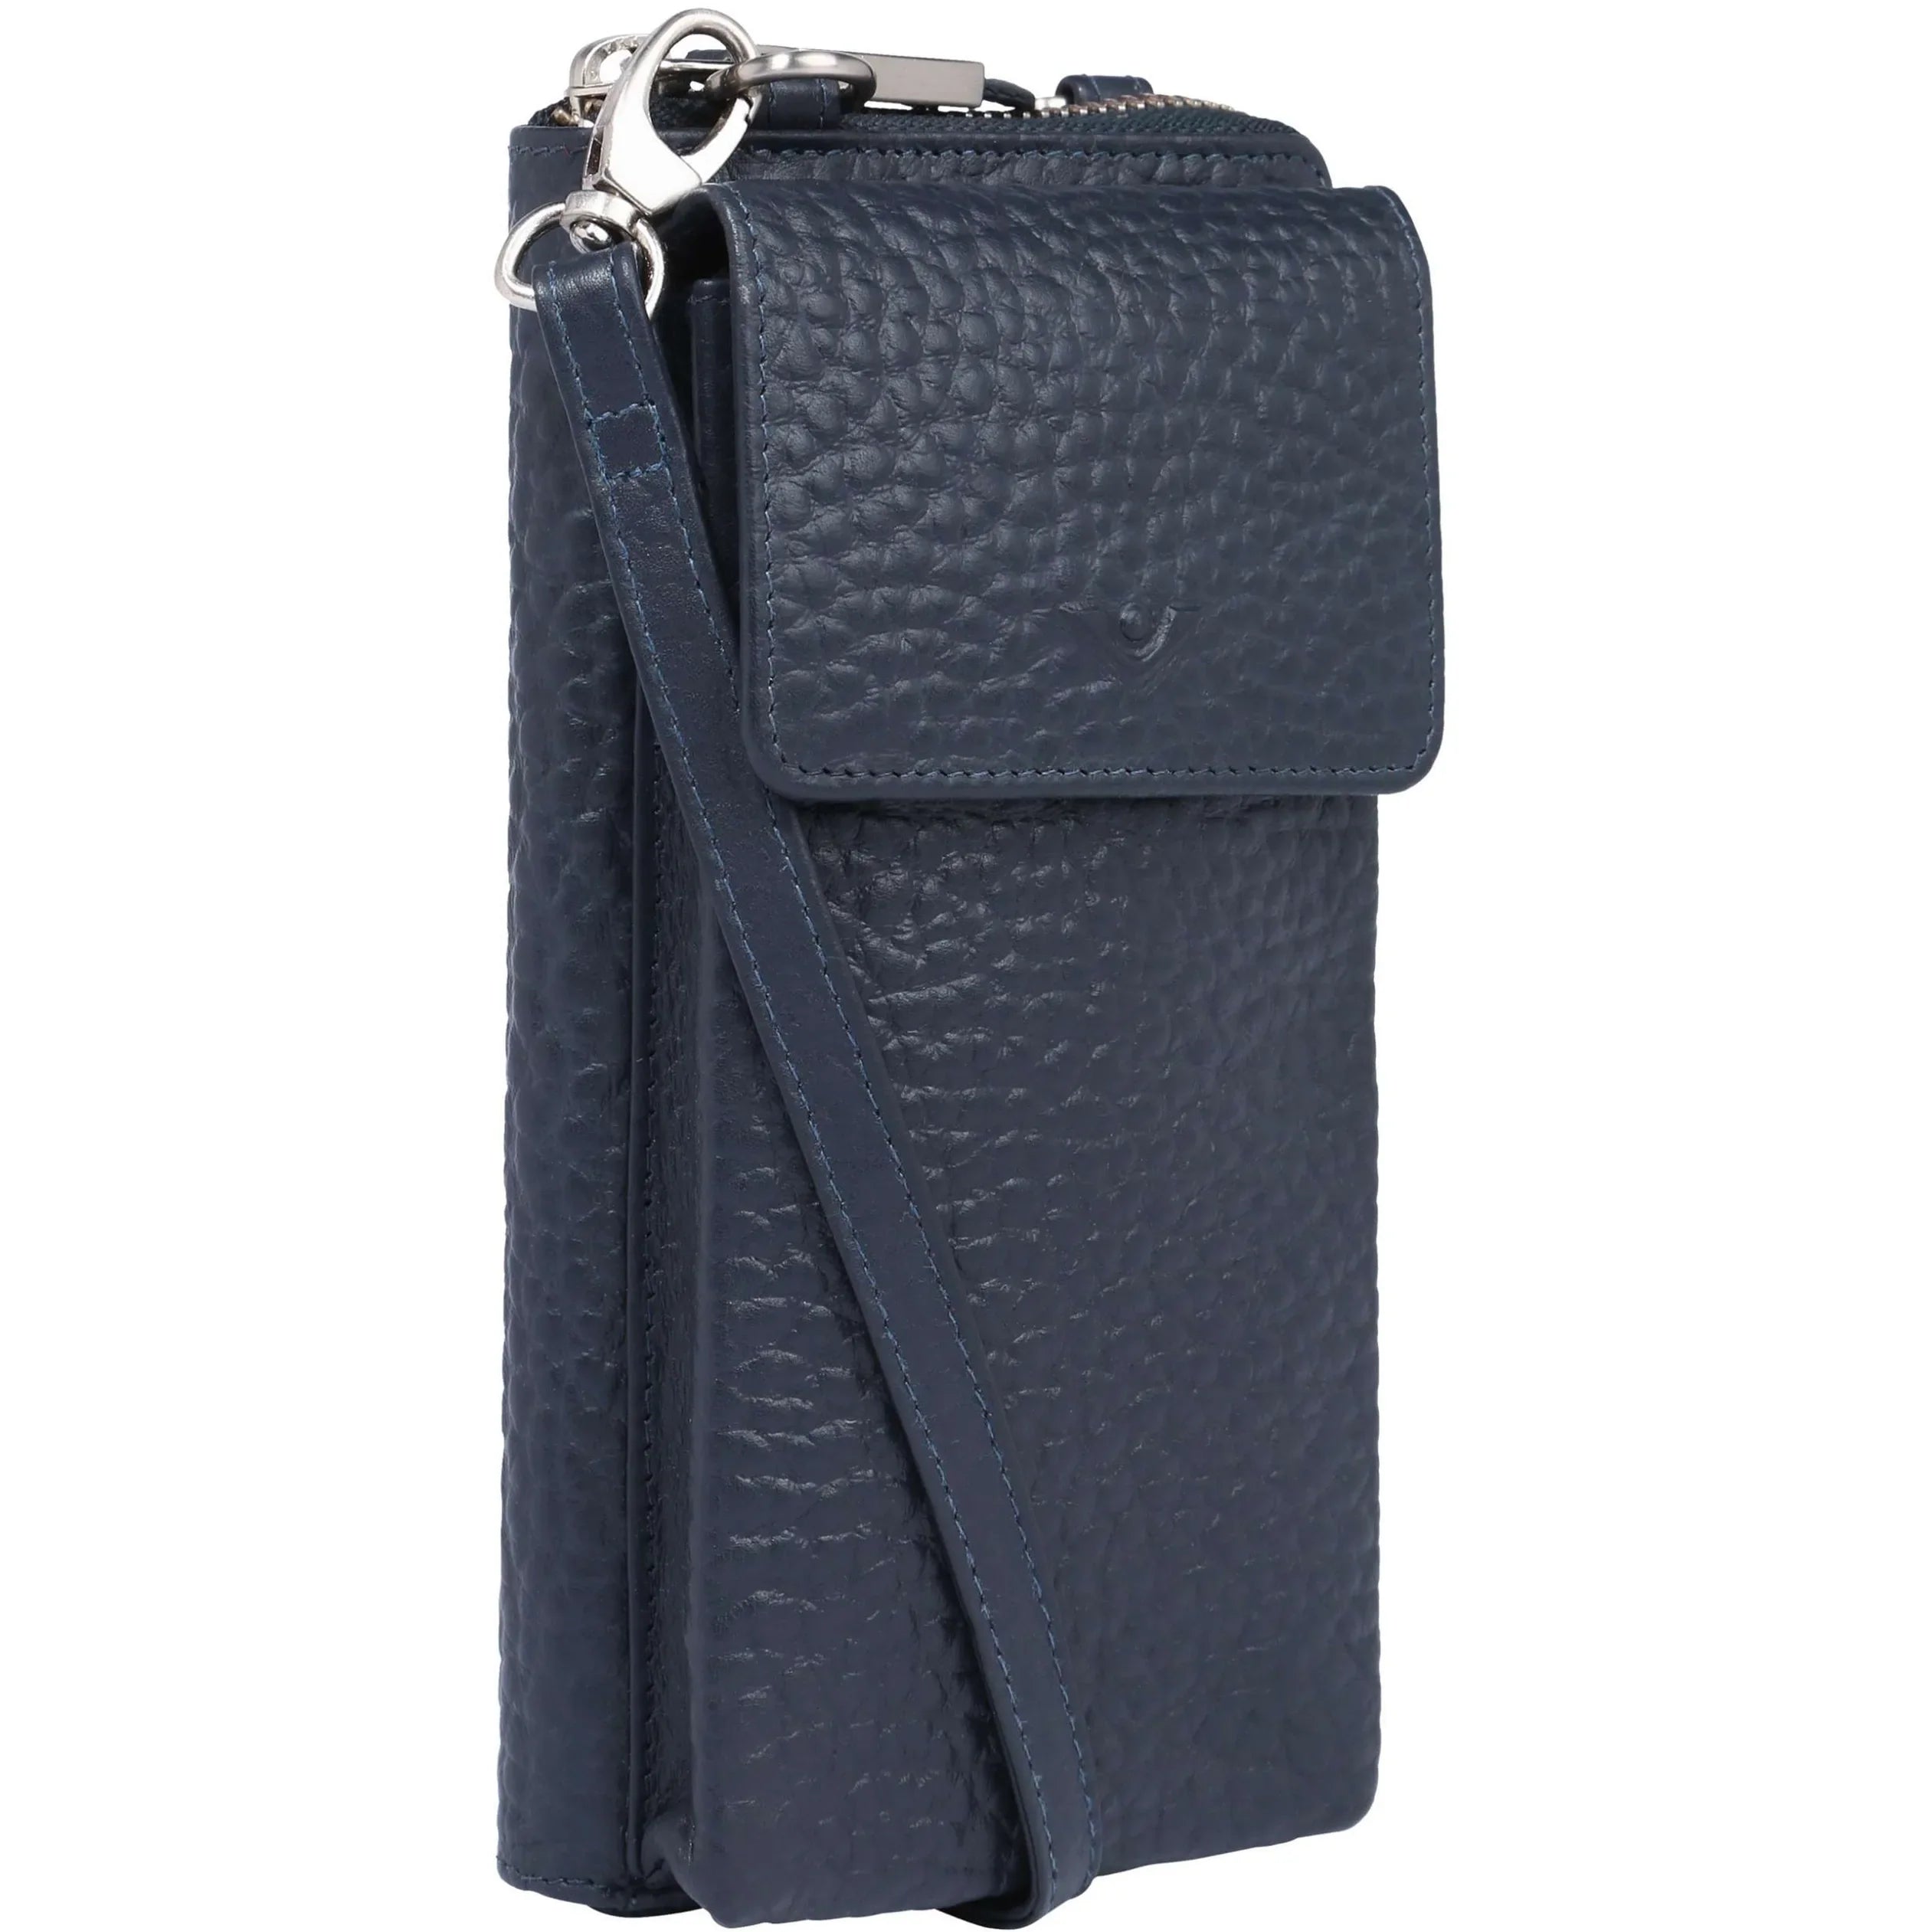 VOi-Design Stag Bonita cell phone wallet 19 cm - Black